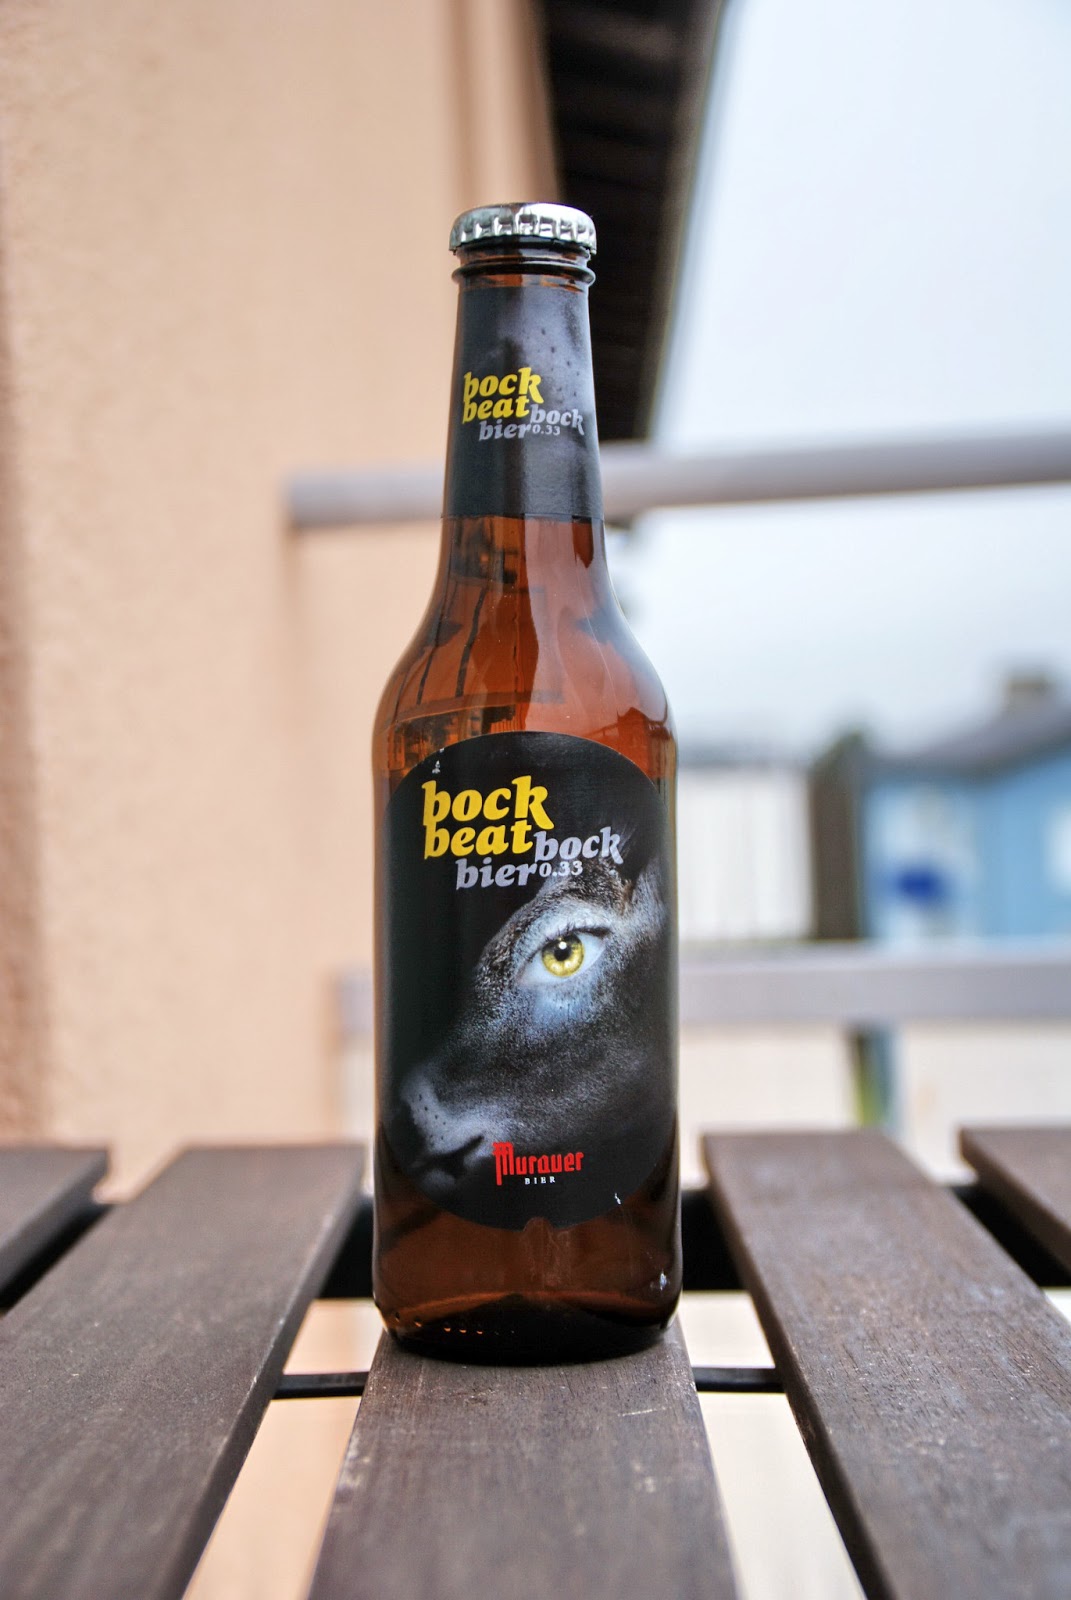 Der Bierige Blog: Murauer Bock Bier